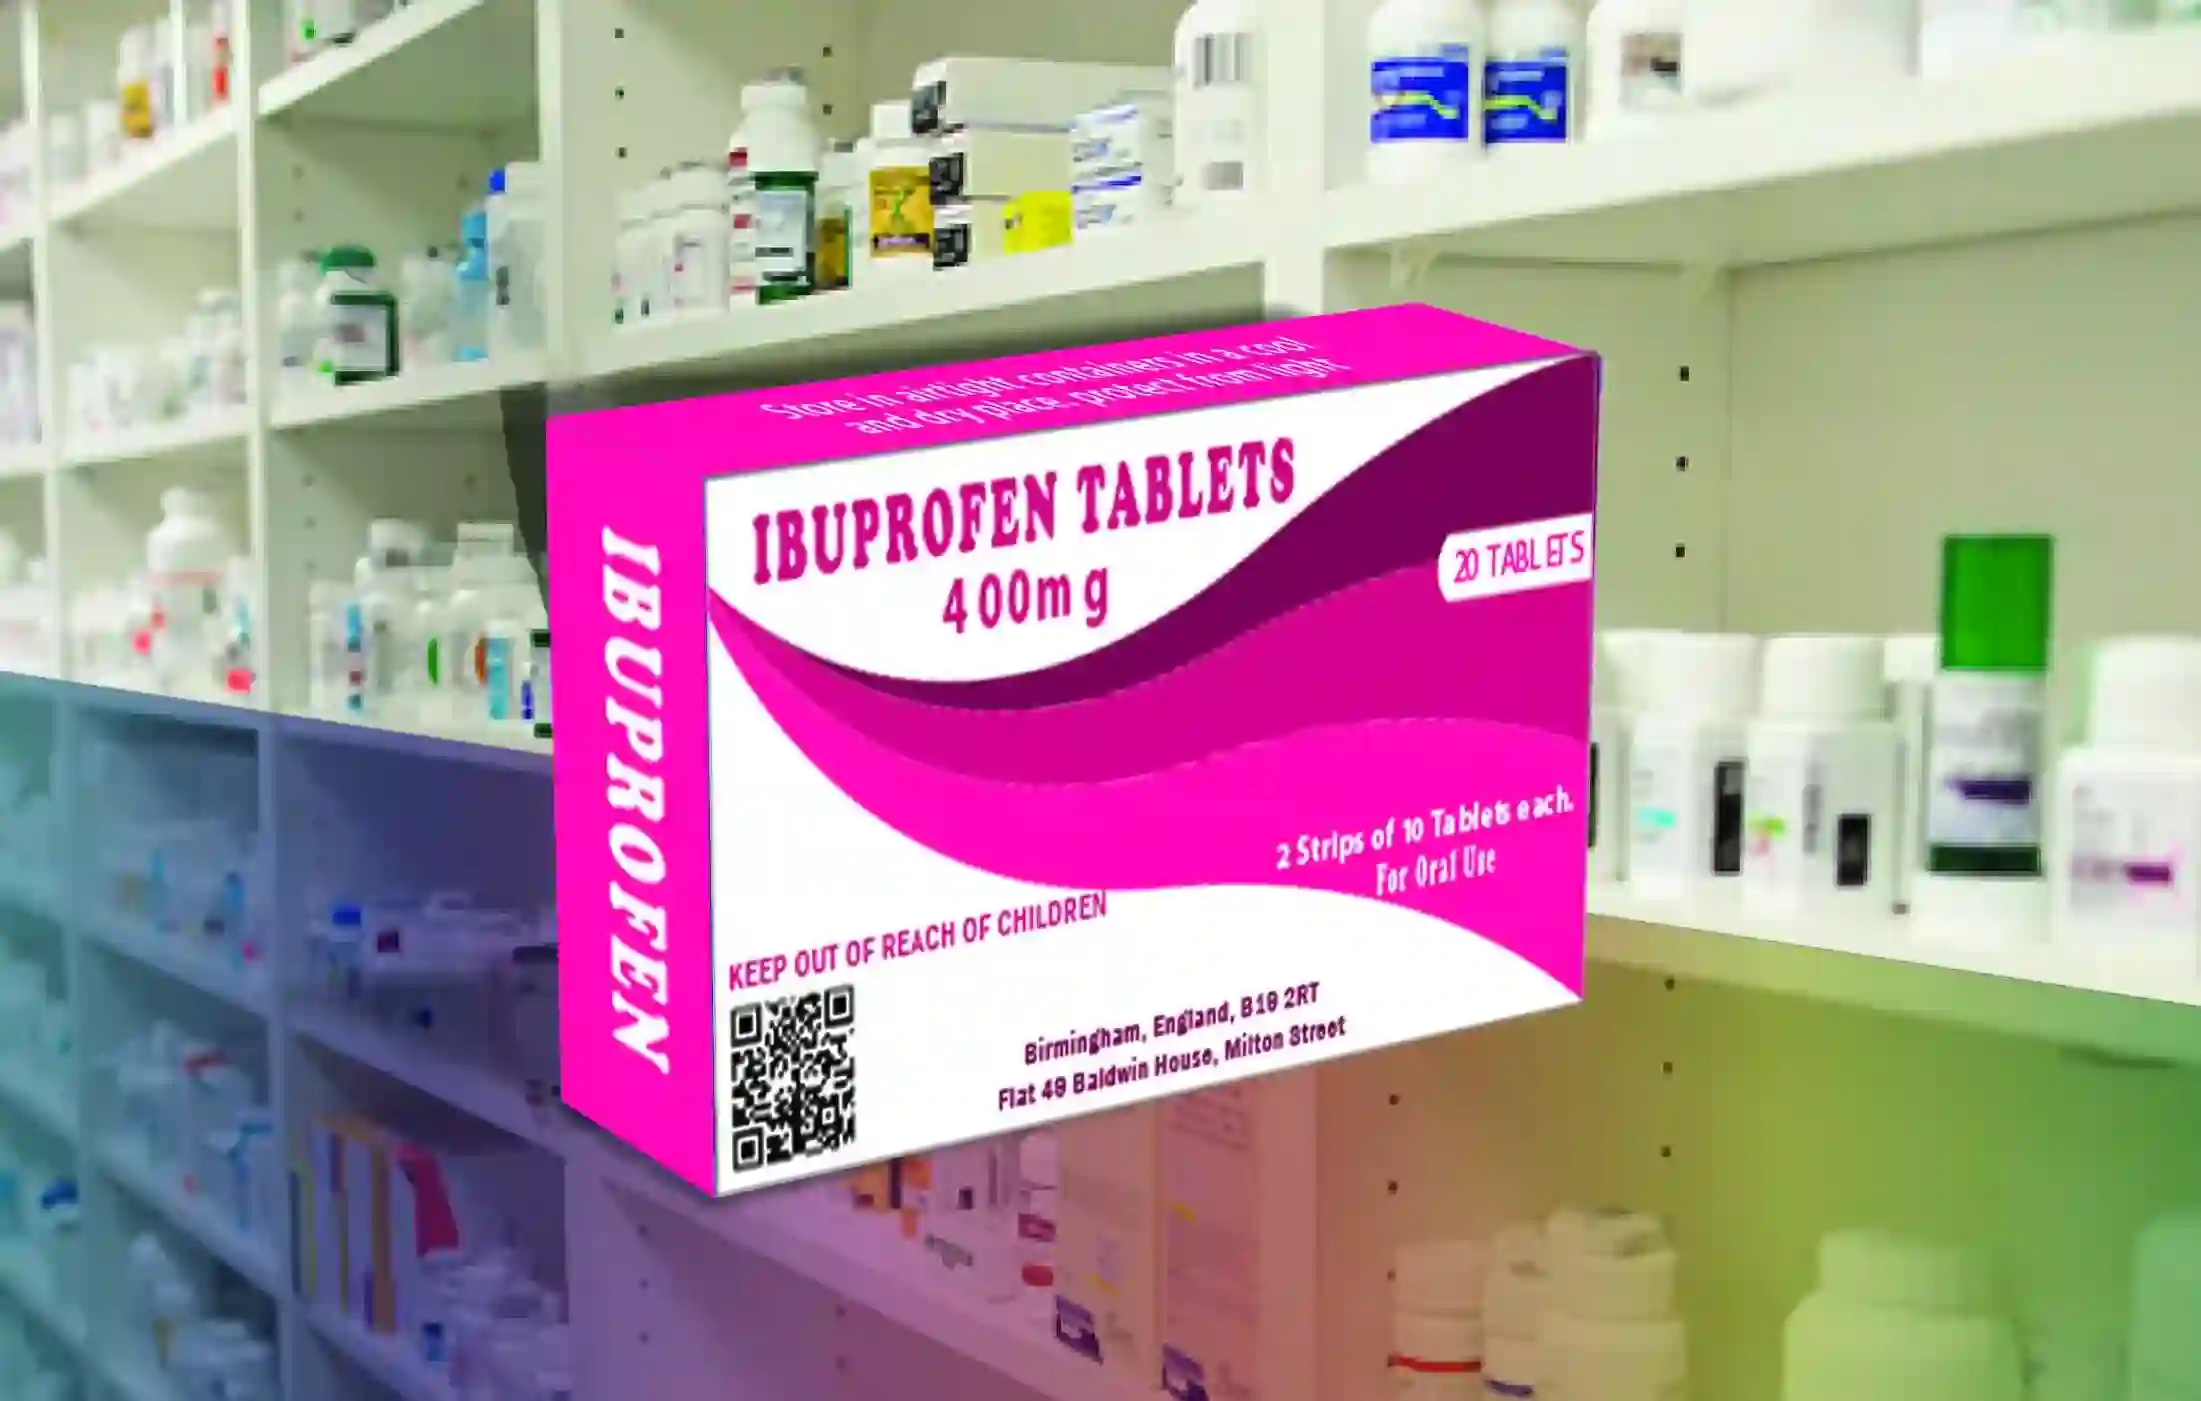 'ibuprofen tablets', 'ibuprofen 400mg tablets', 'antiinflammatory tablets', 'analgesic'